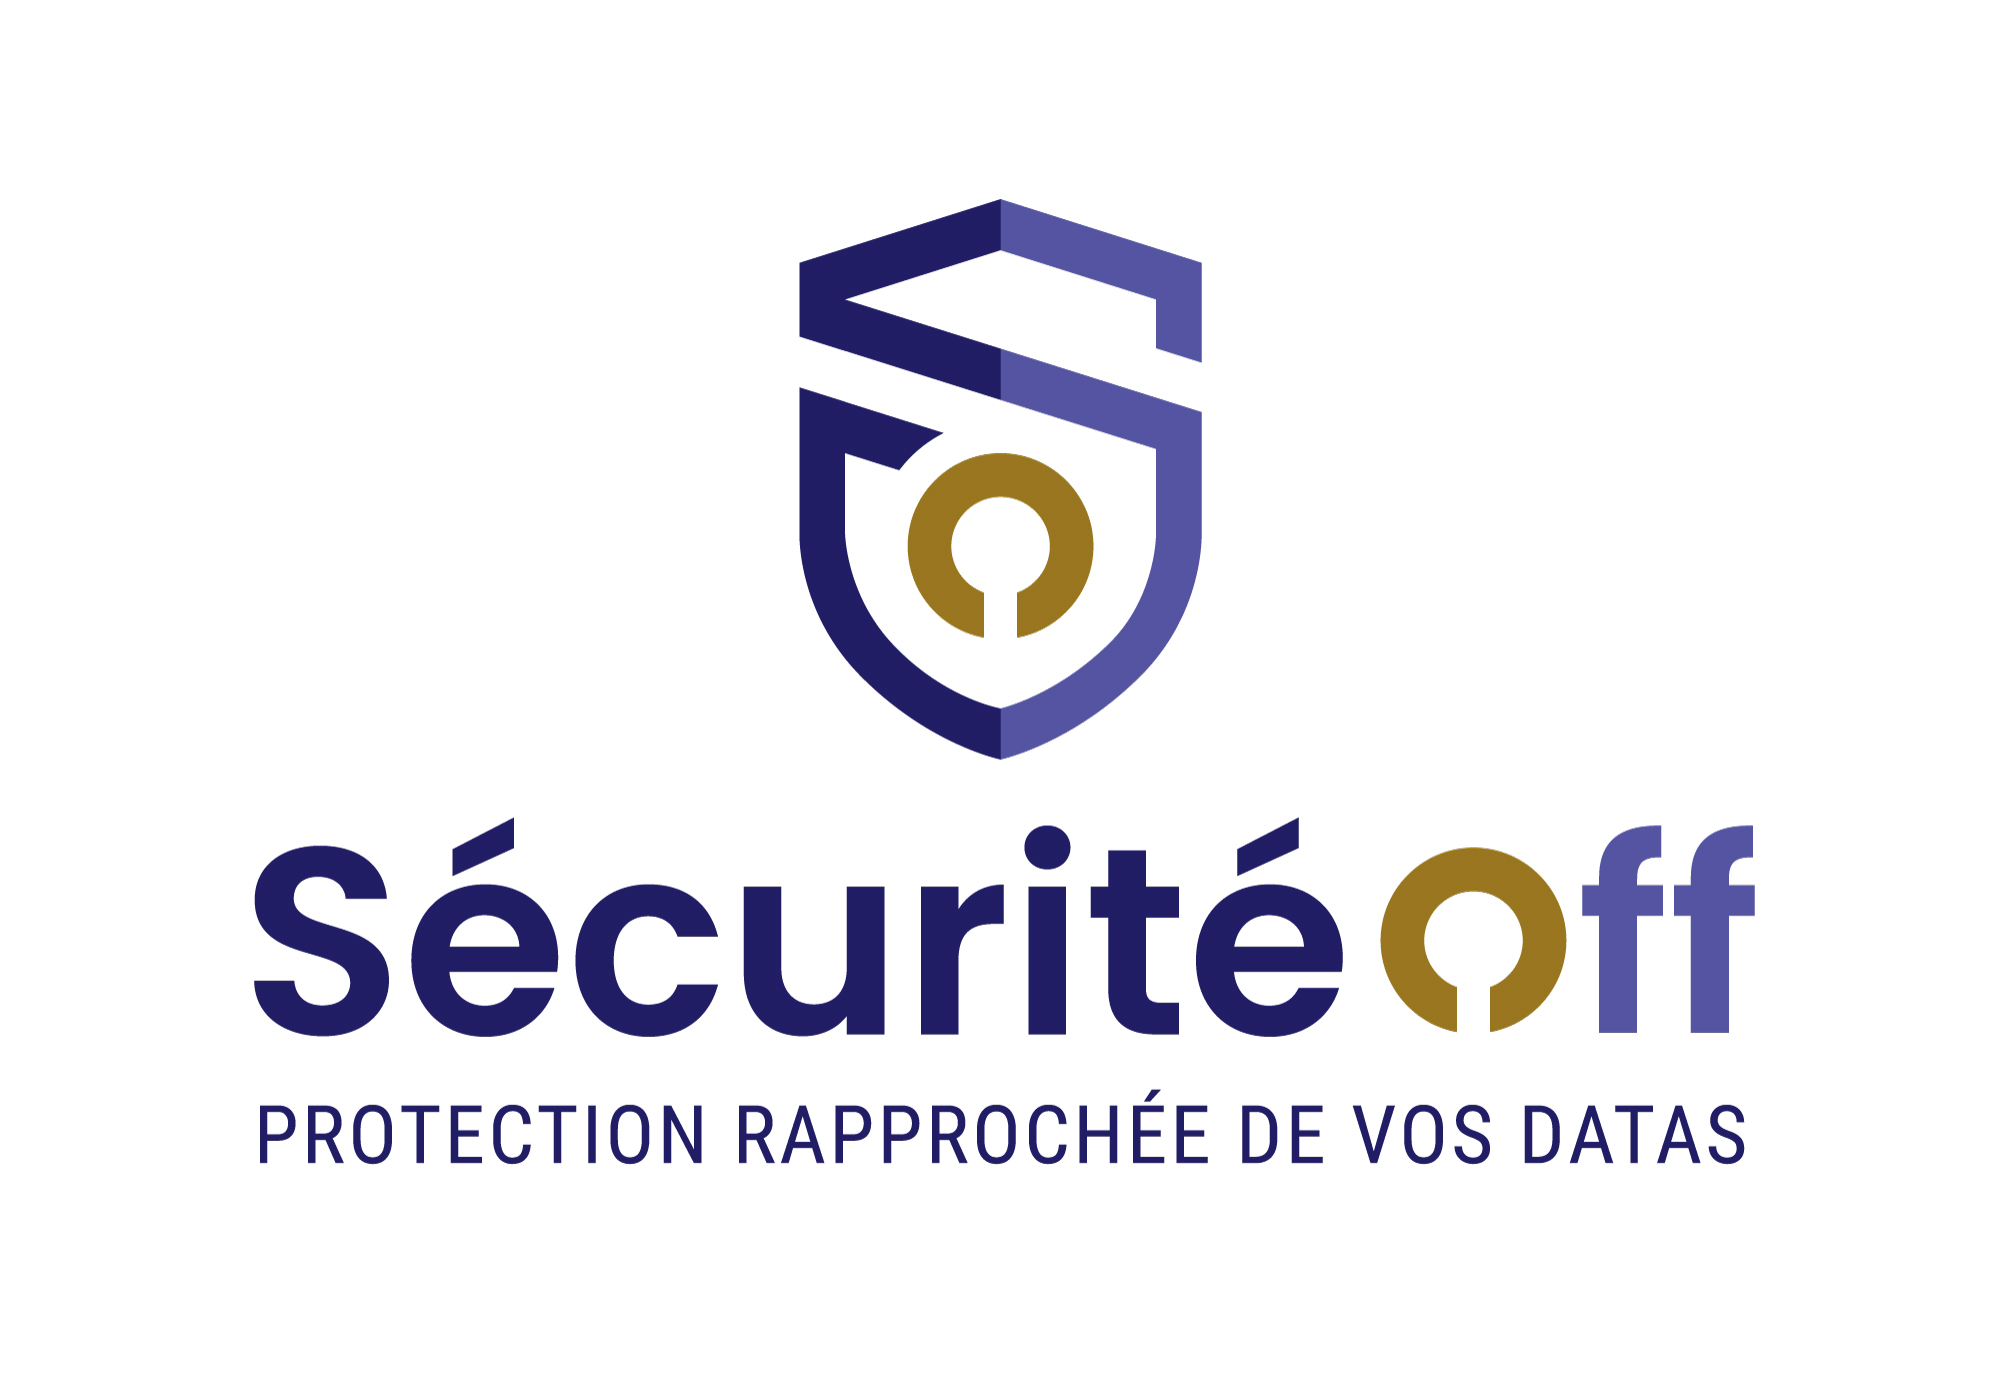 SecuriteOff